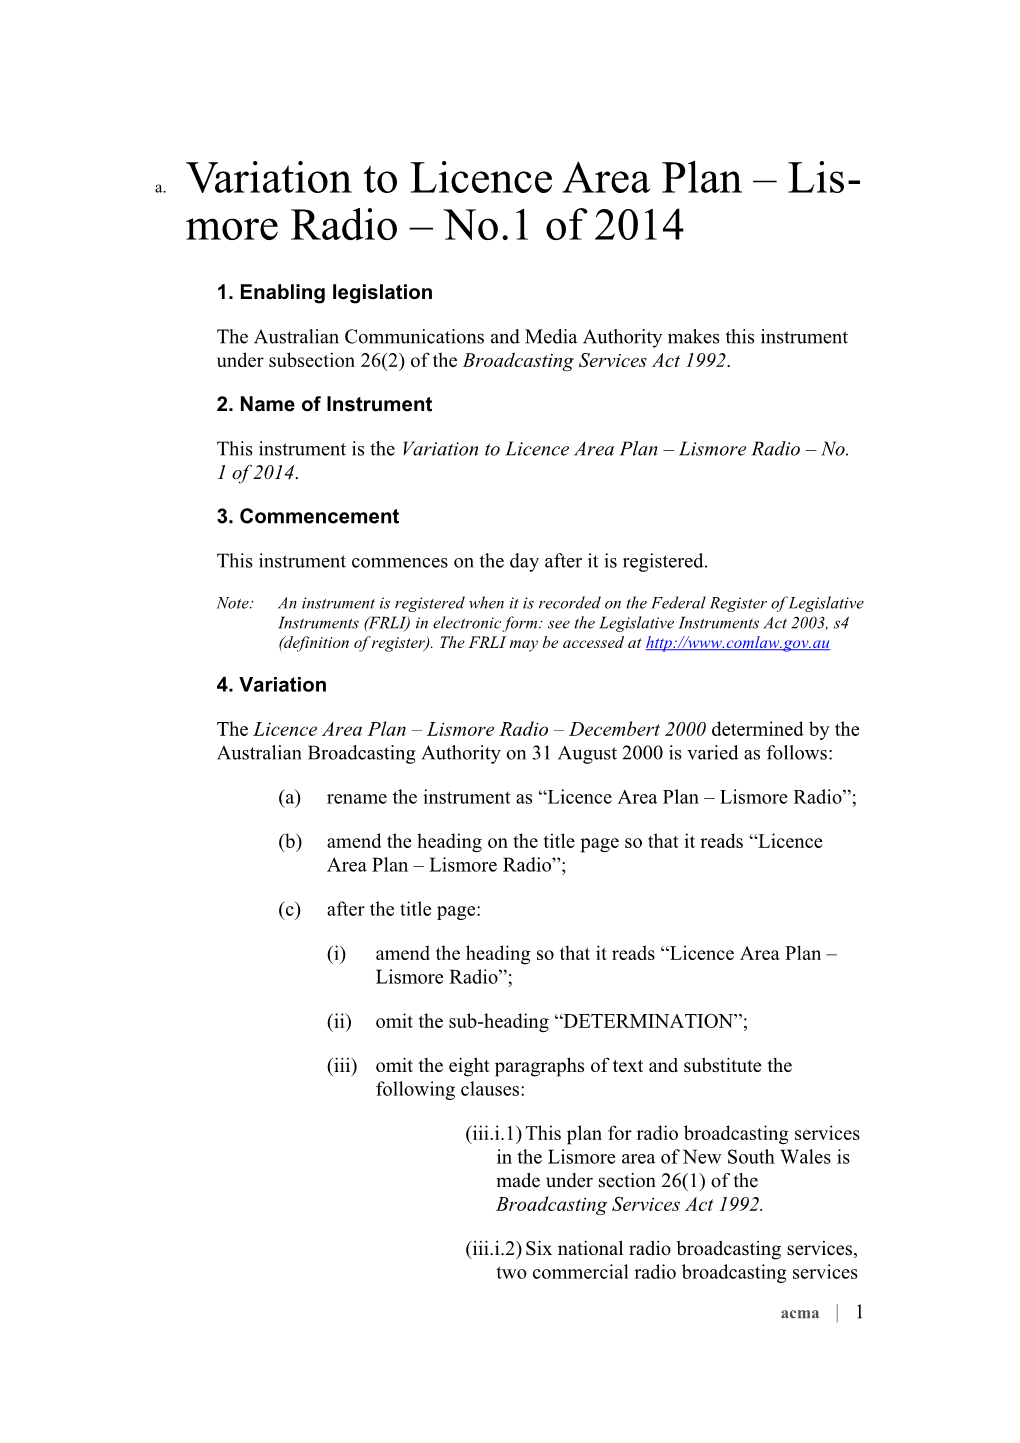 Variation to Licence Area Plan Lismore Radio No.1 of 2014